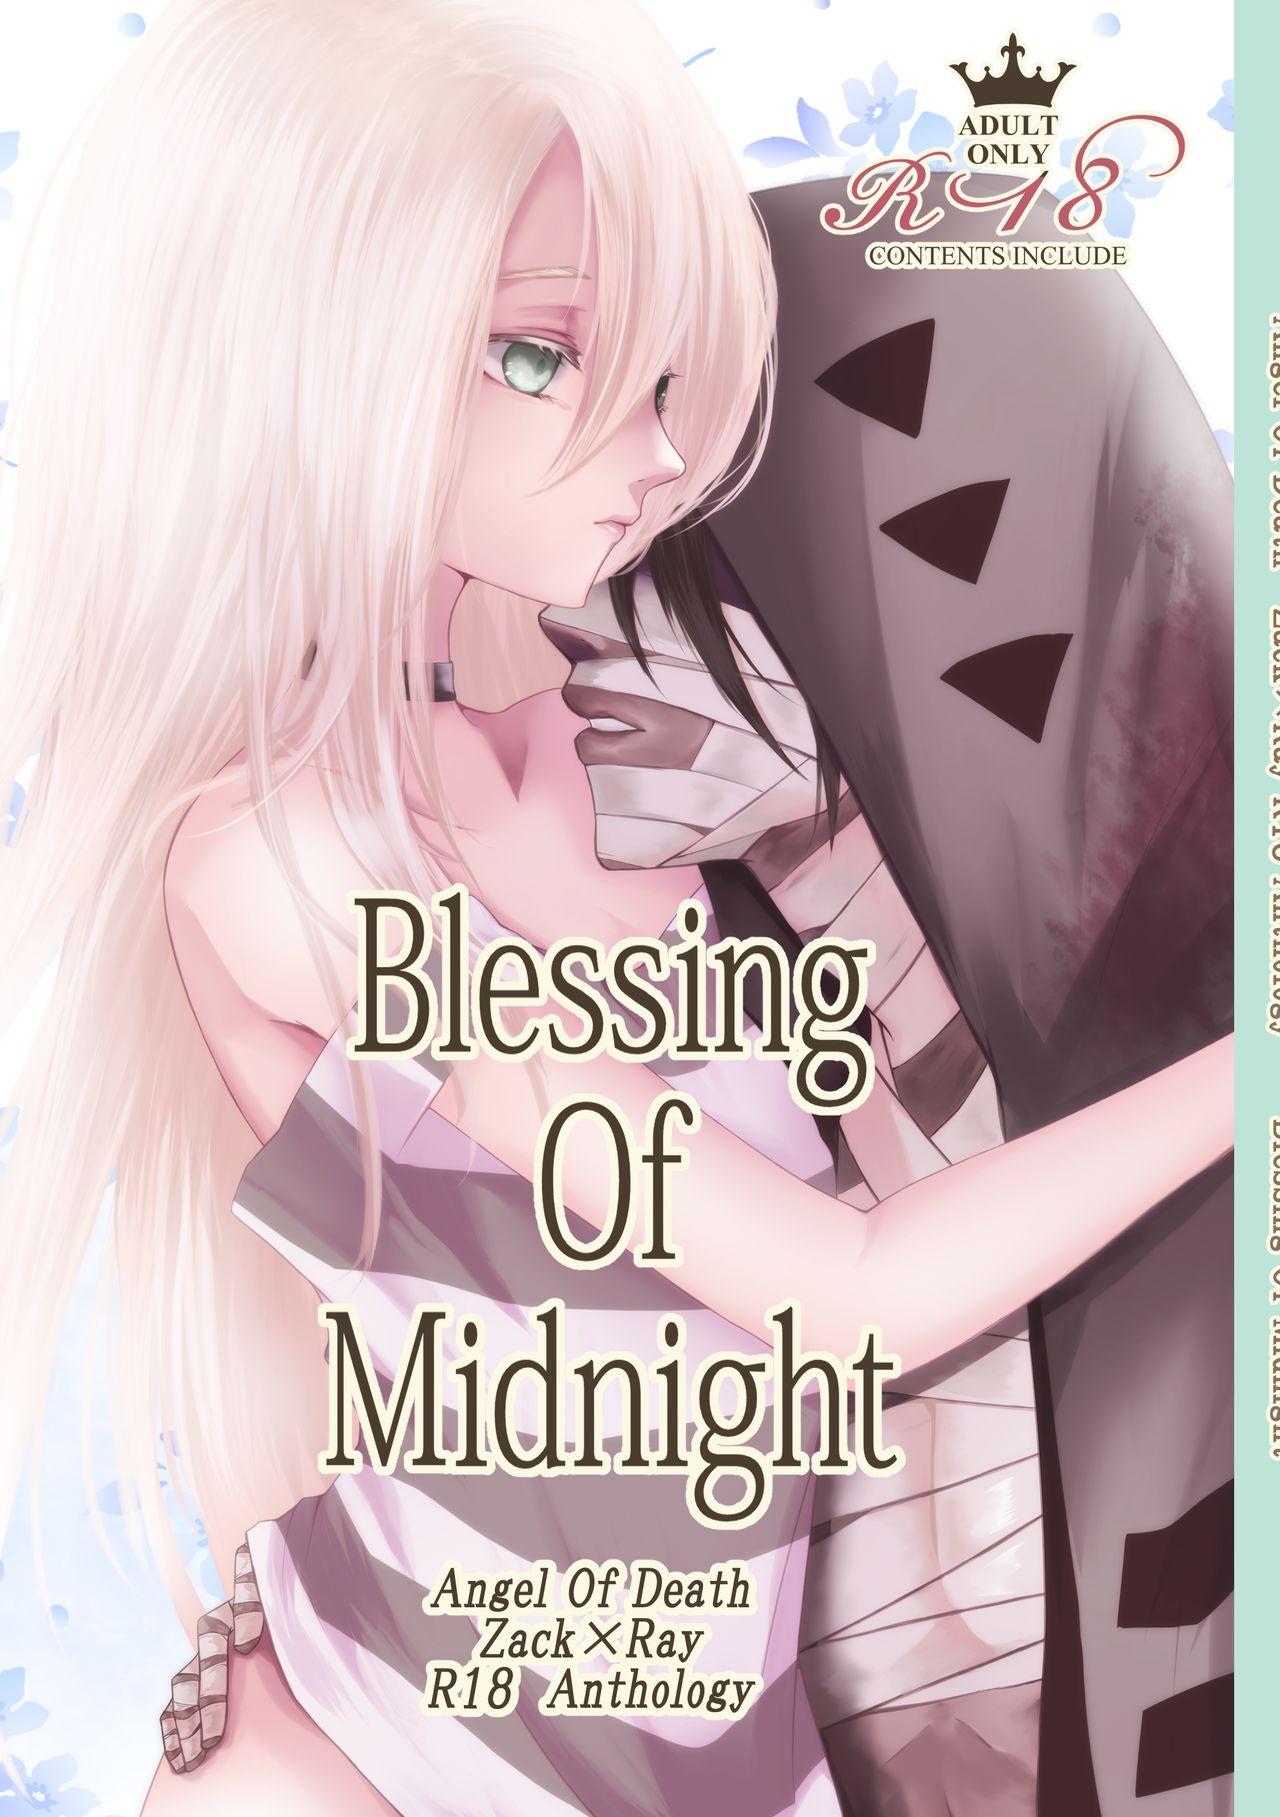 Pornstars Blessing Of Midnight - Satsuriku no tenshi Off - Picture 1